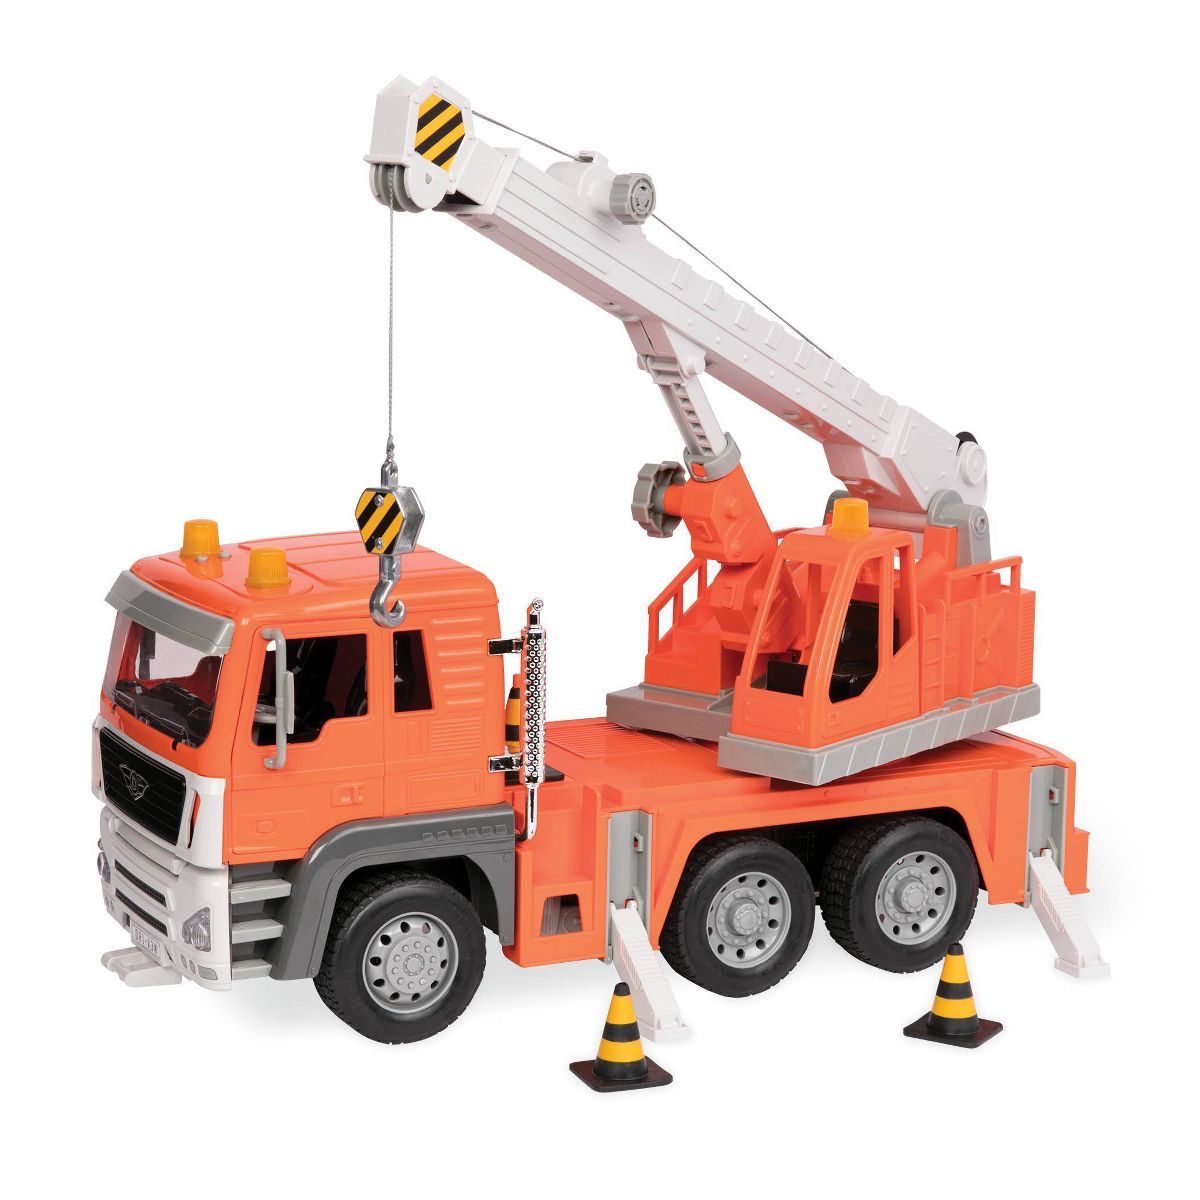 DRIVEN – Toy Crane Truck – Standard Series | Target